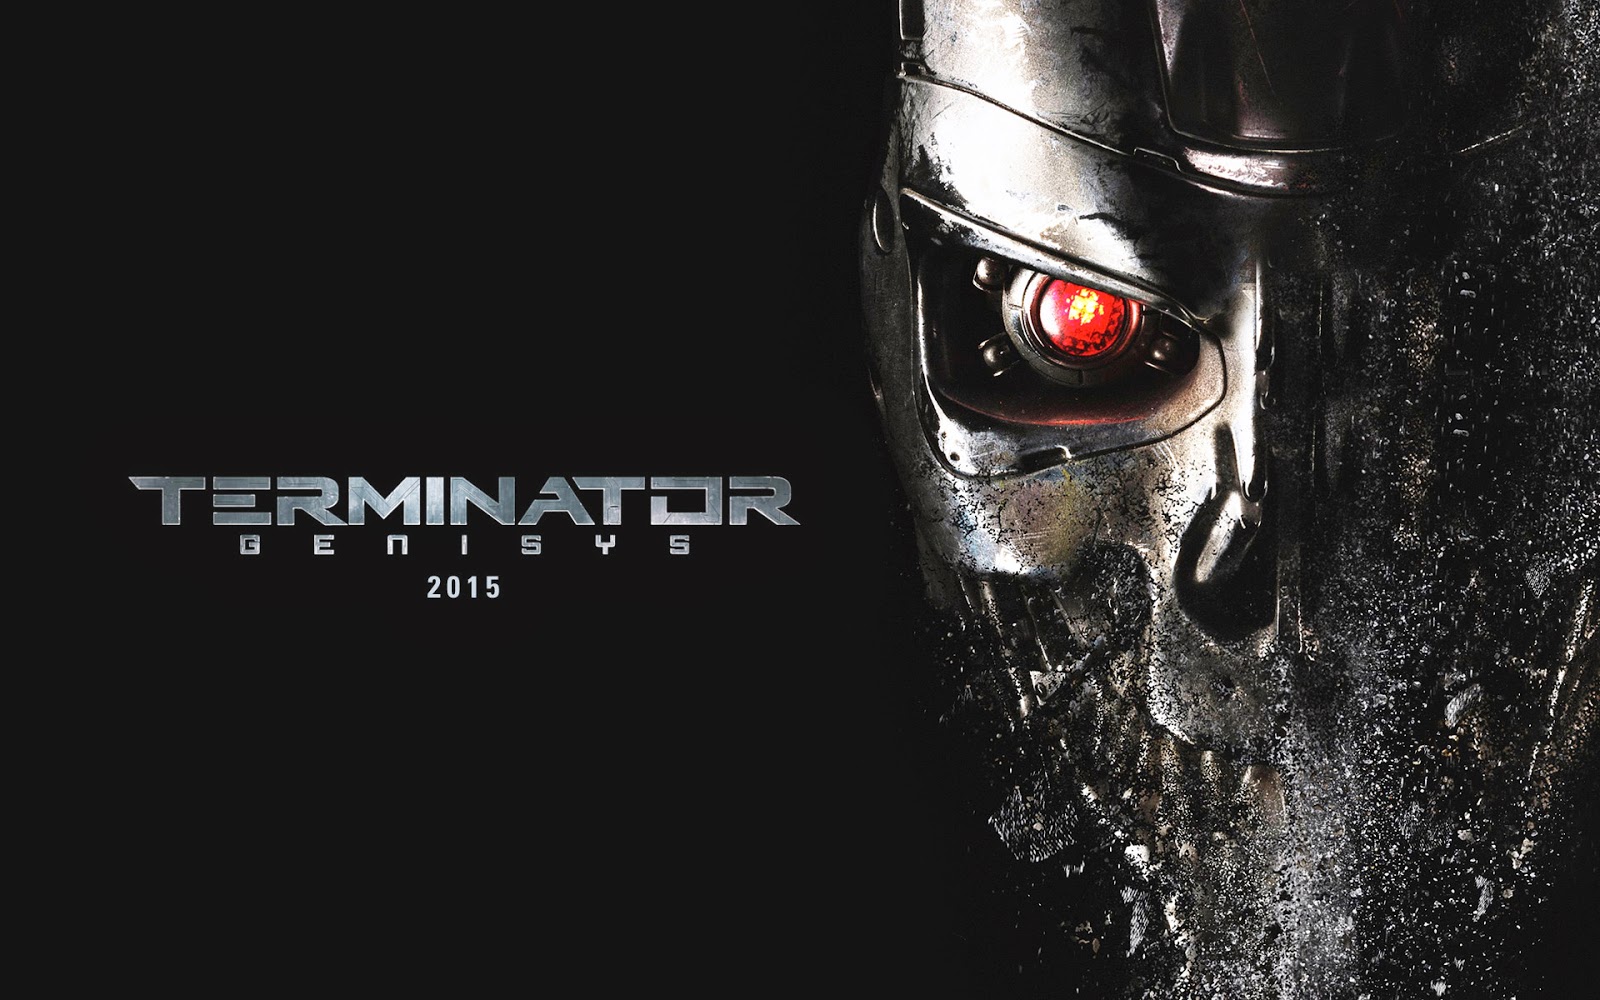 Arnold Terminator Genisys Wallpaper Poster